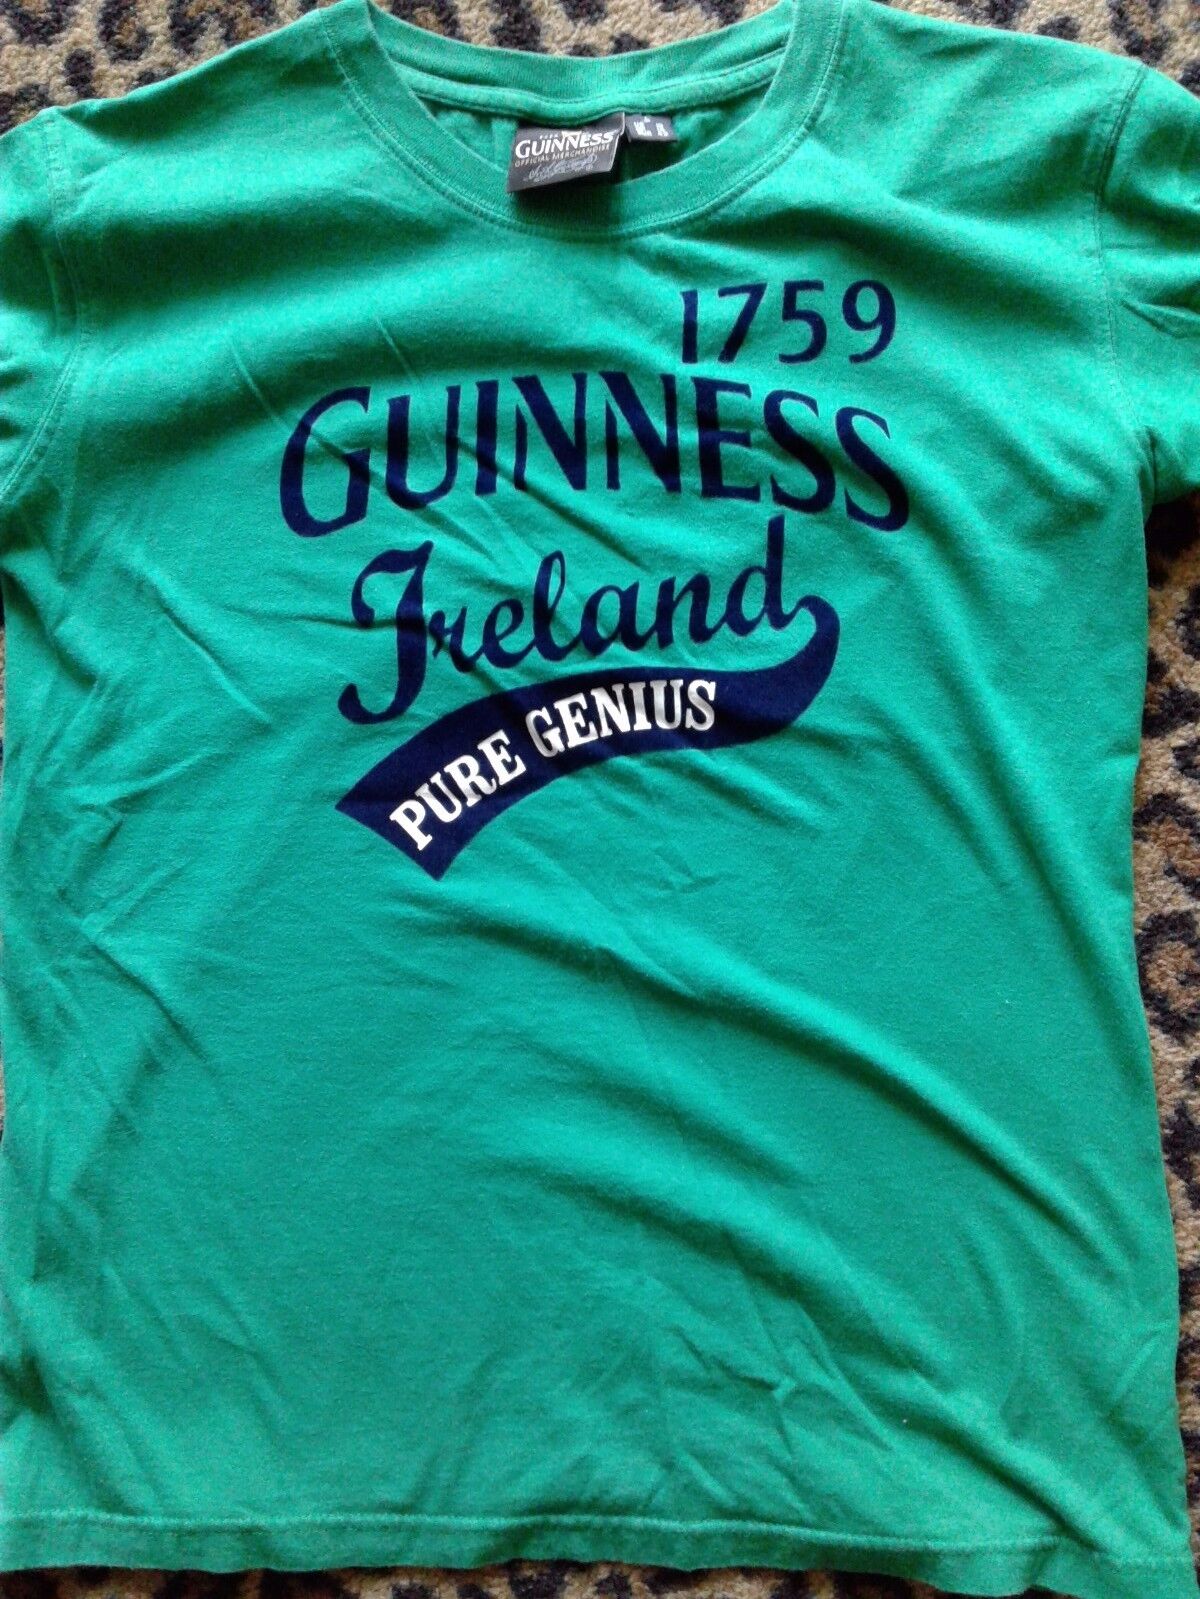 Guinness Pure Genius shirt used ladies size US 10  L